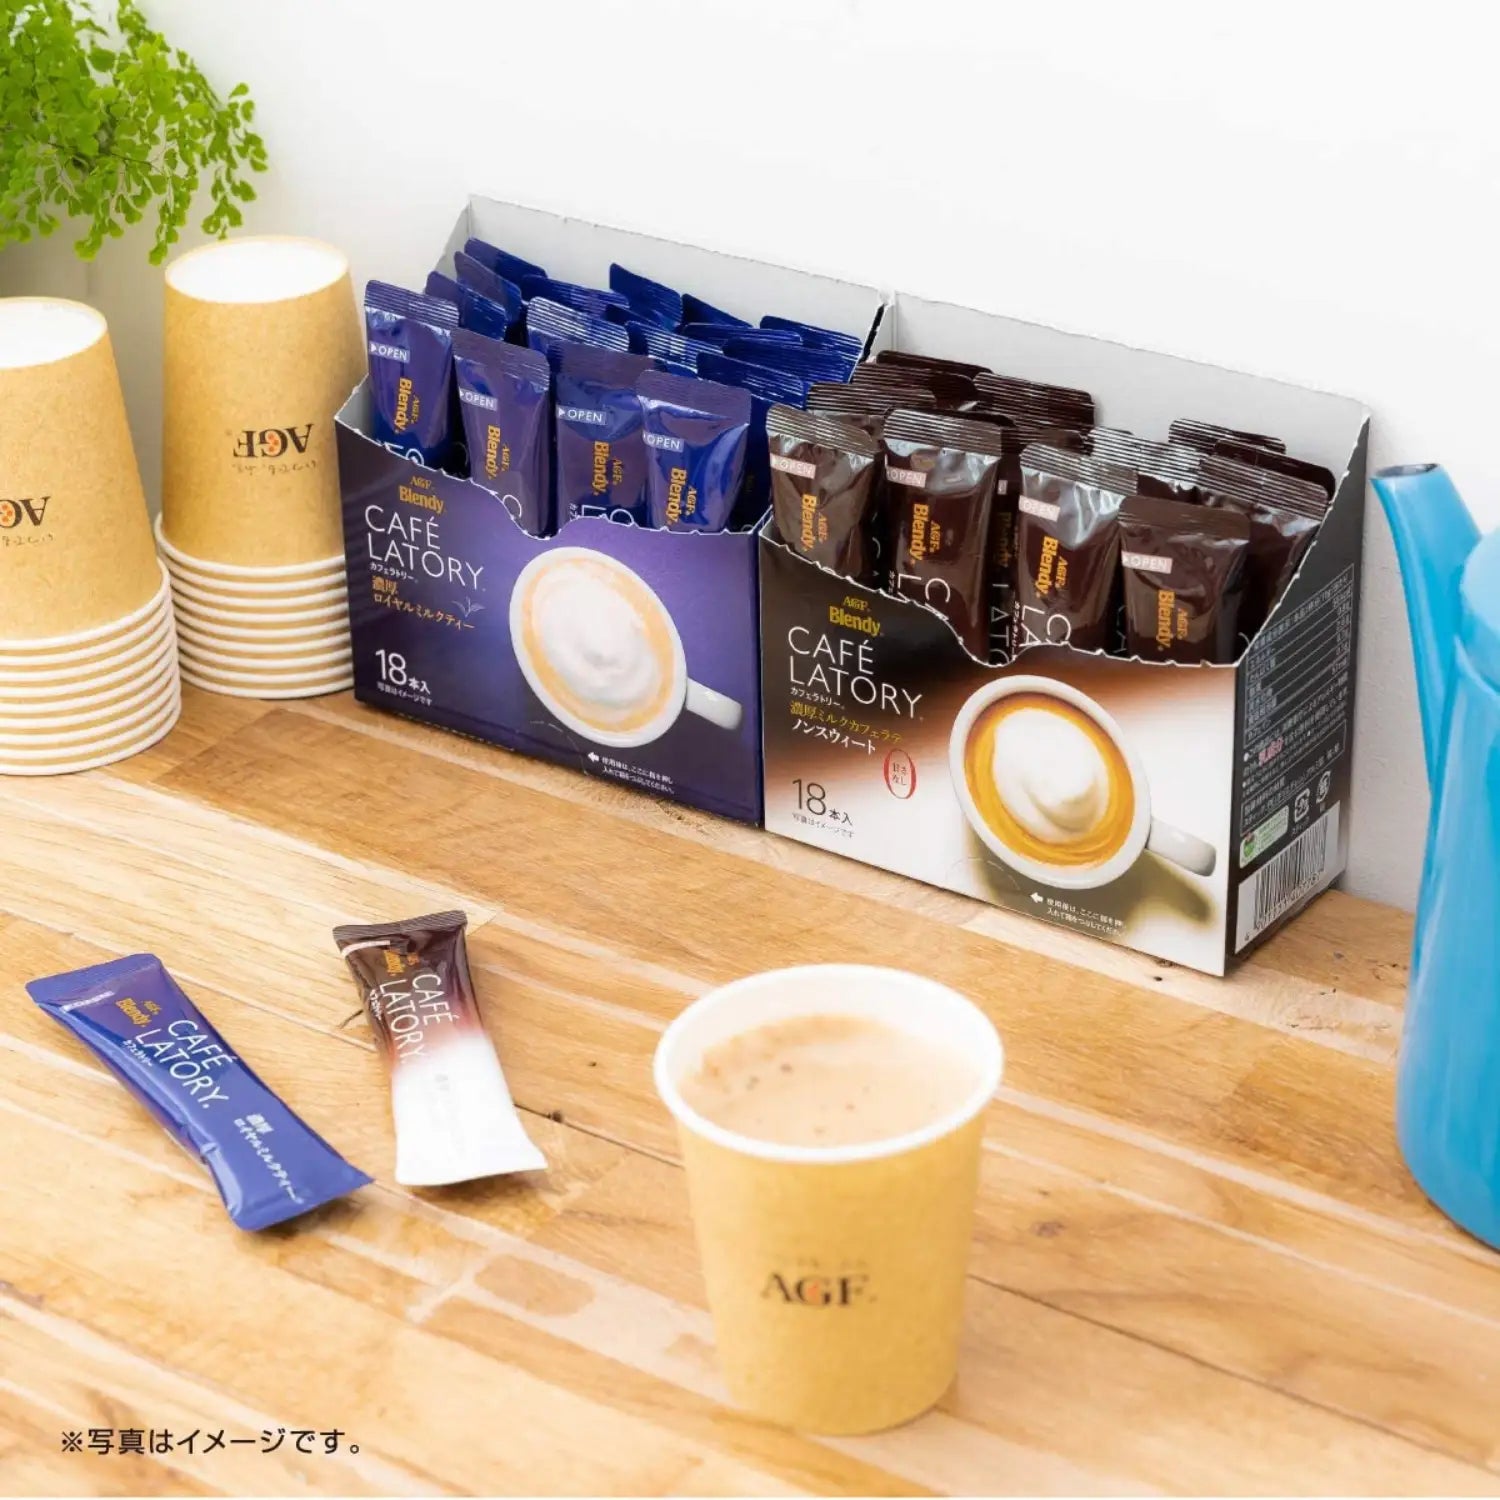 AGF Blendy Sticks Latory Café Au Lait (Pack of 20) - Buy Me Japan